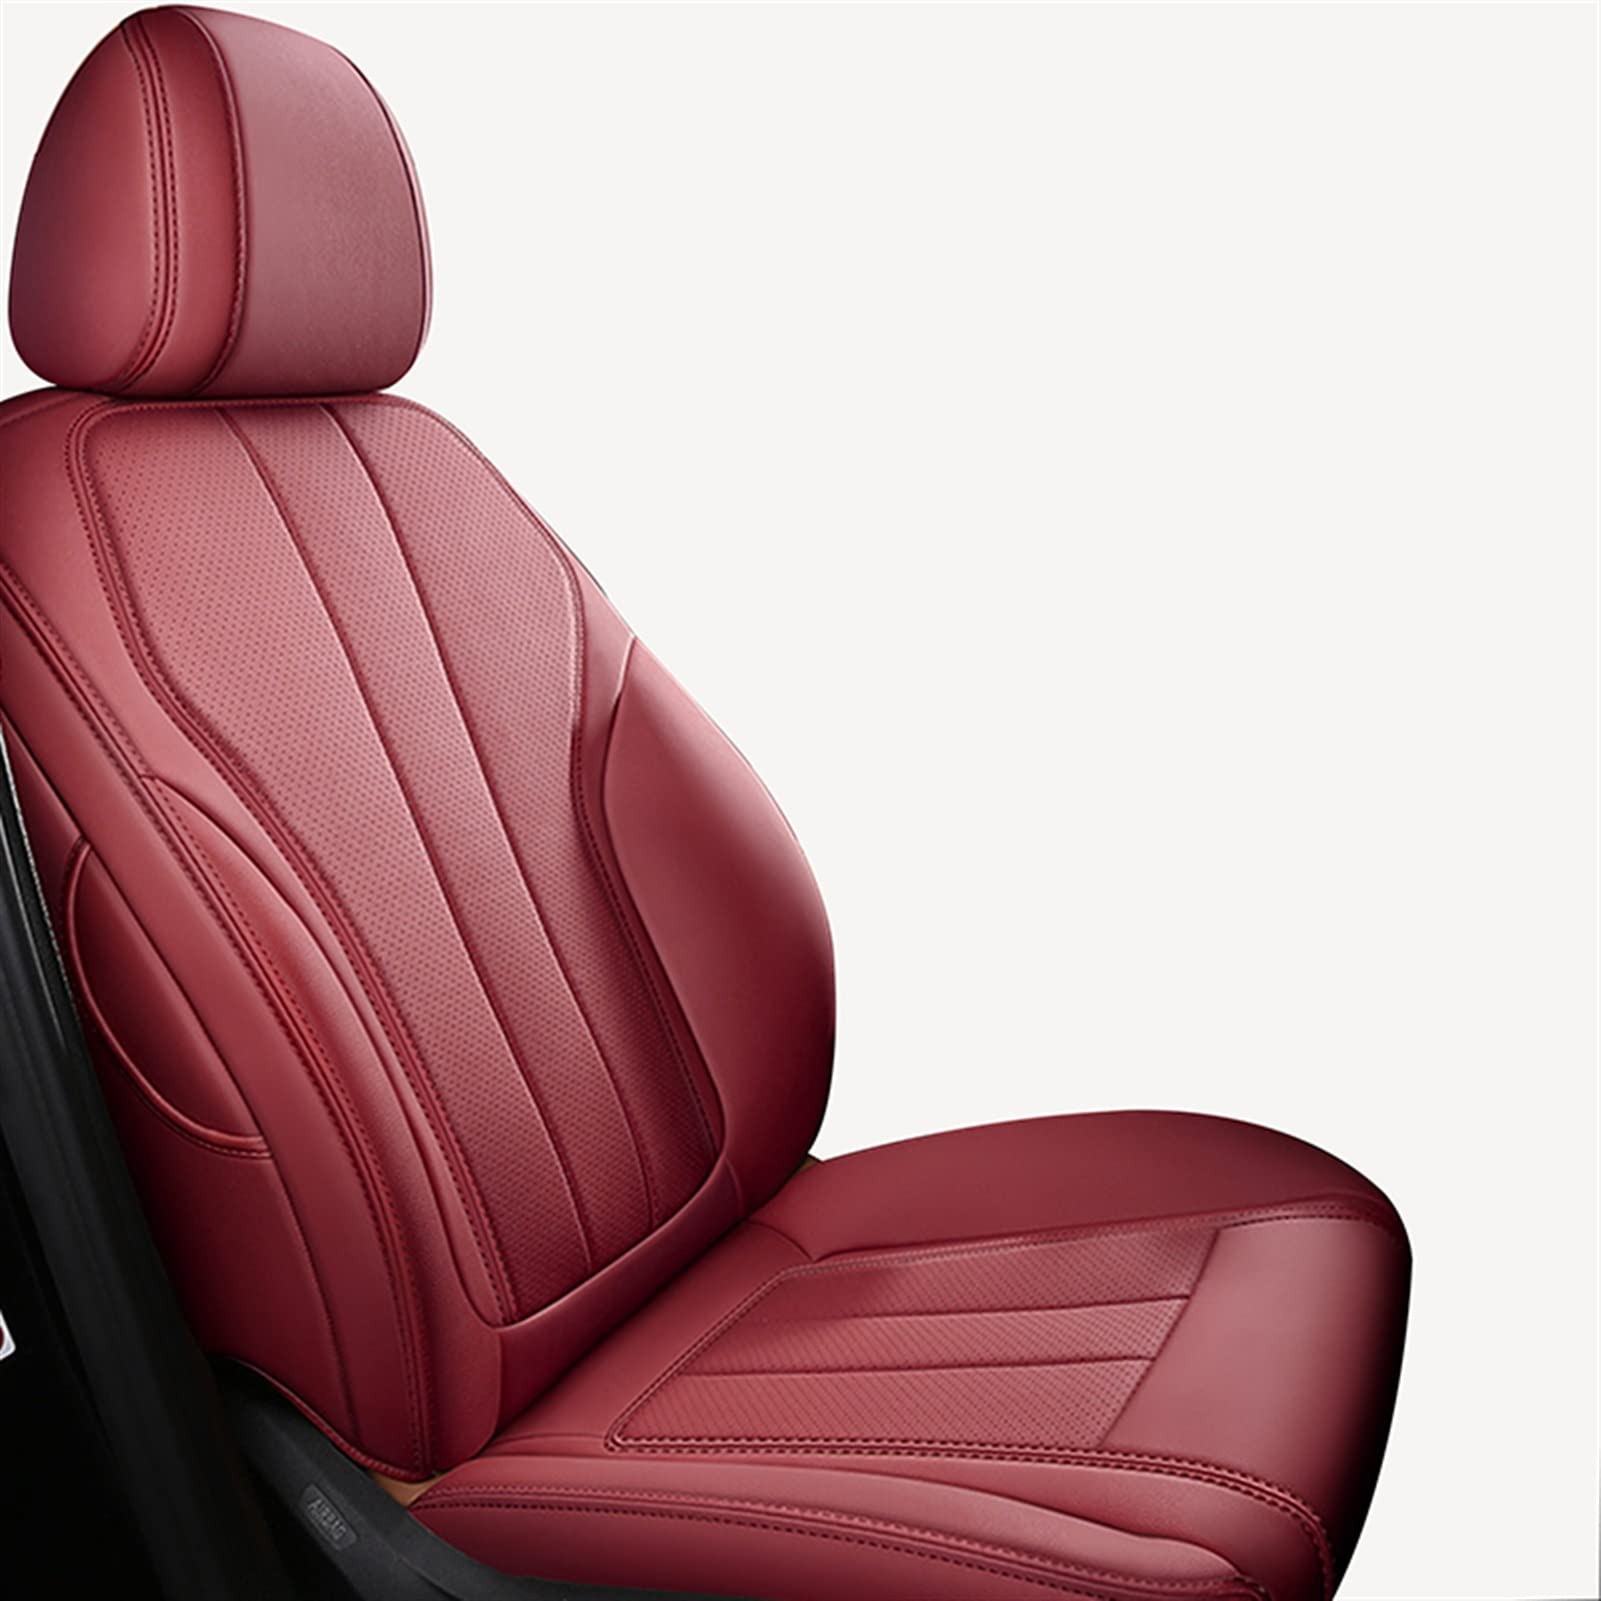 TATARENGS Automobilinnenraum Kompatibel Mit Ford Für Explorer 2020 2013 2014 2016 2017 Auto-Innenraum-Fahrersitzbezug Sitzbezug-Schutz(5) von TATARENGS